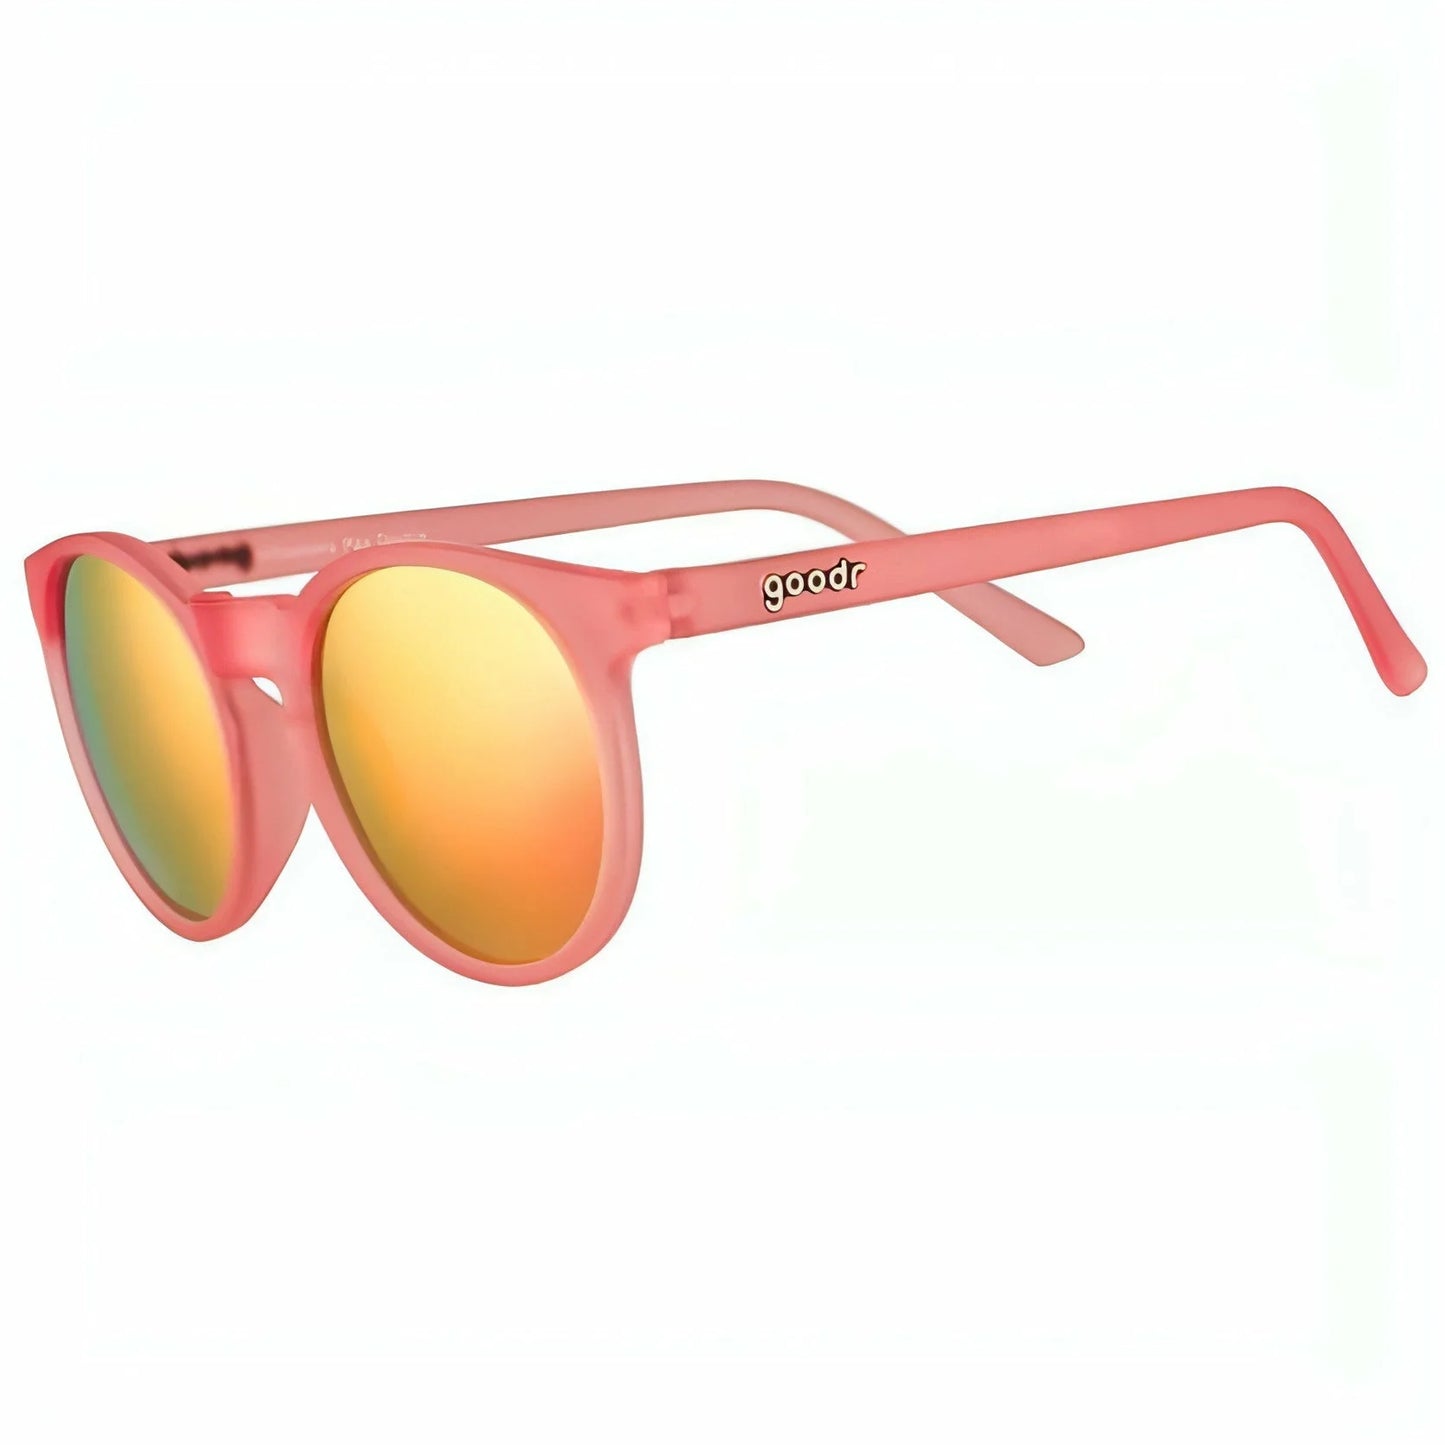 Goodr Circle G sunglasses